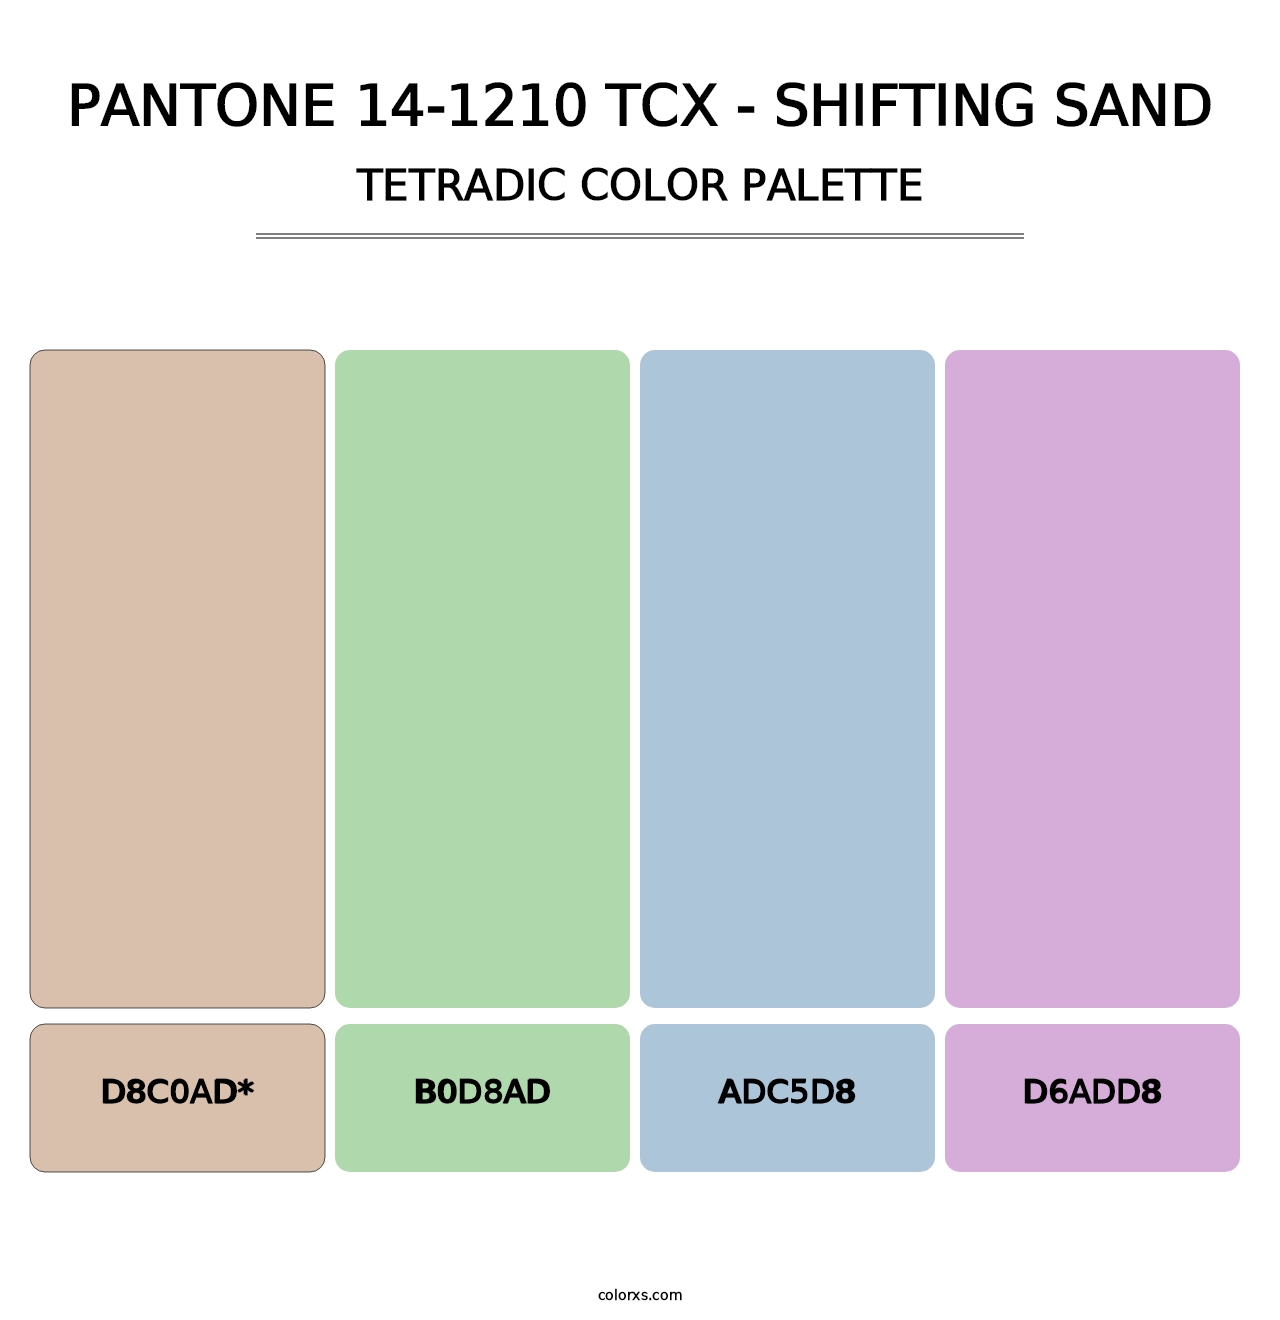 PANTONE 14-1210 TCX - Shifting Sand - Tetradic Color Palette